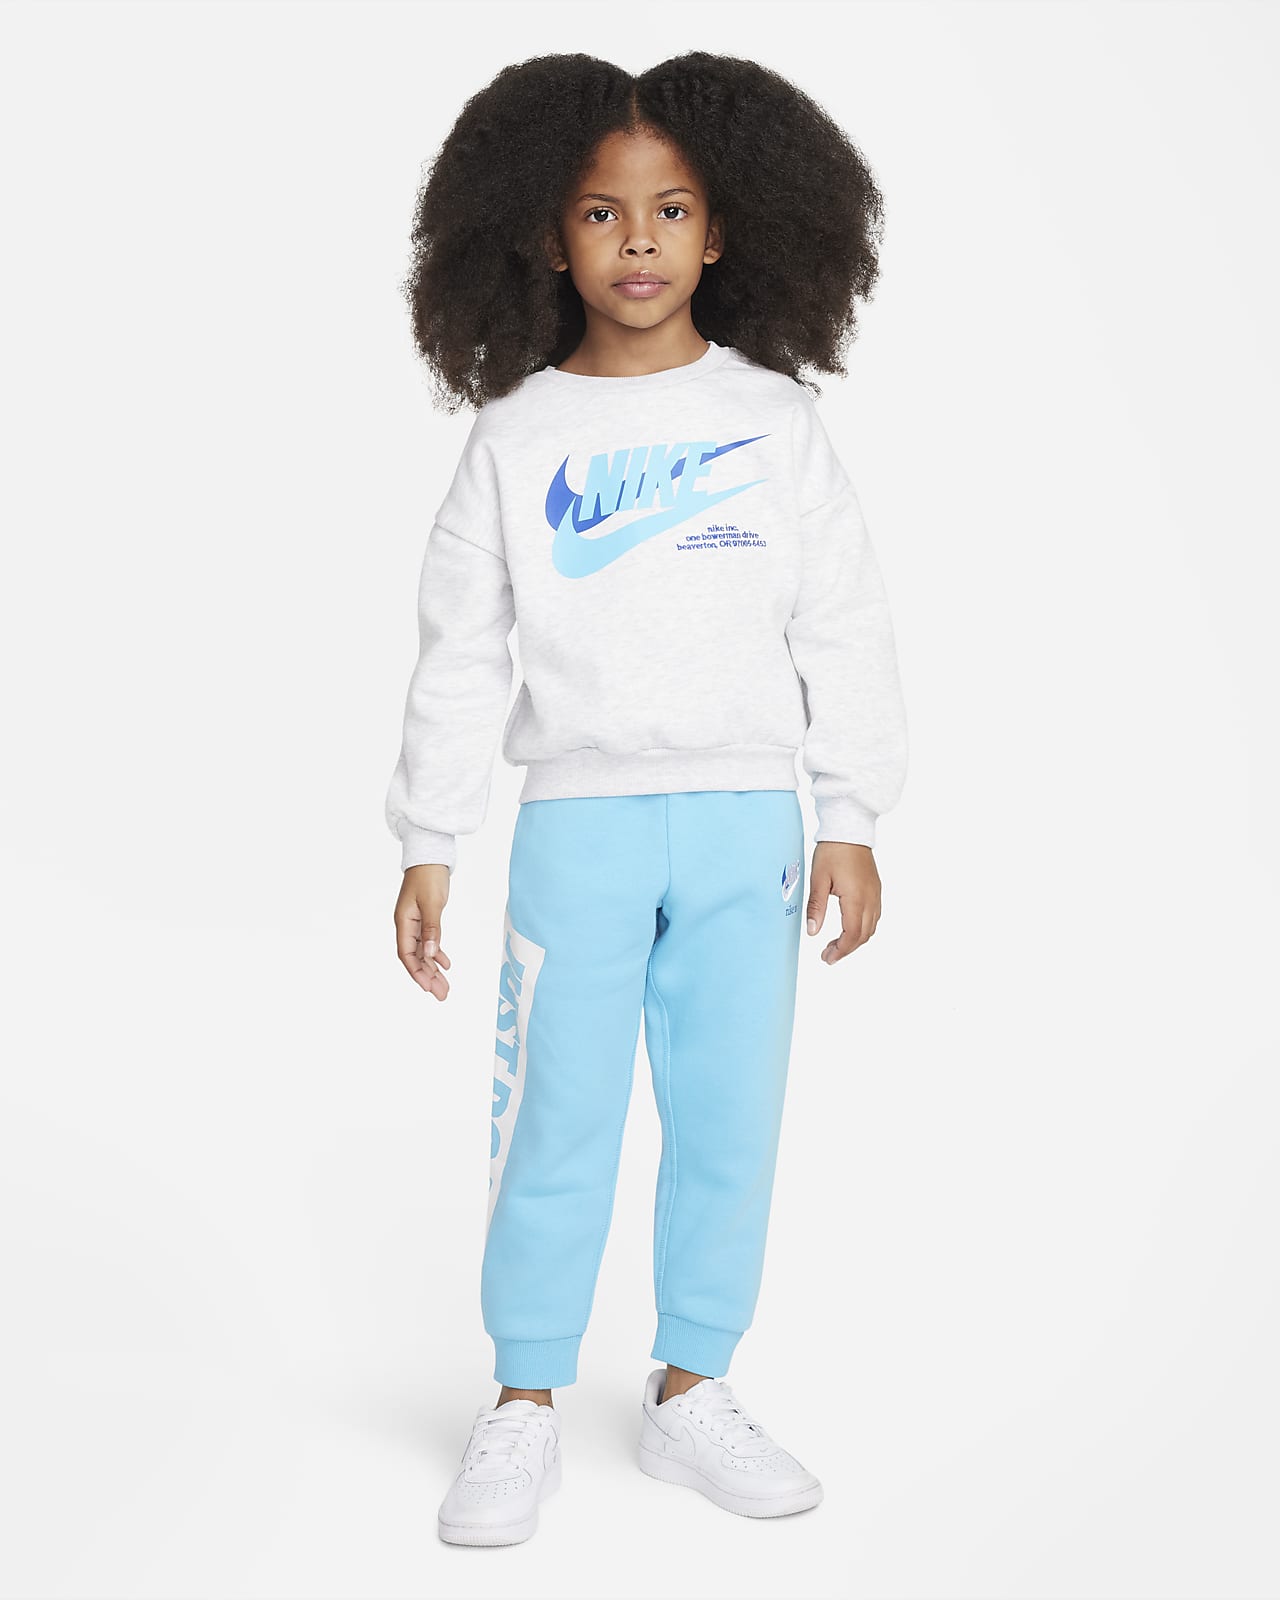 struik Citaat weerstand bieden Nike Sportswear Icon Fleece Pants Little Kids' Pants. Nike.com